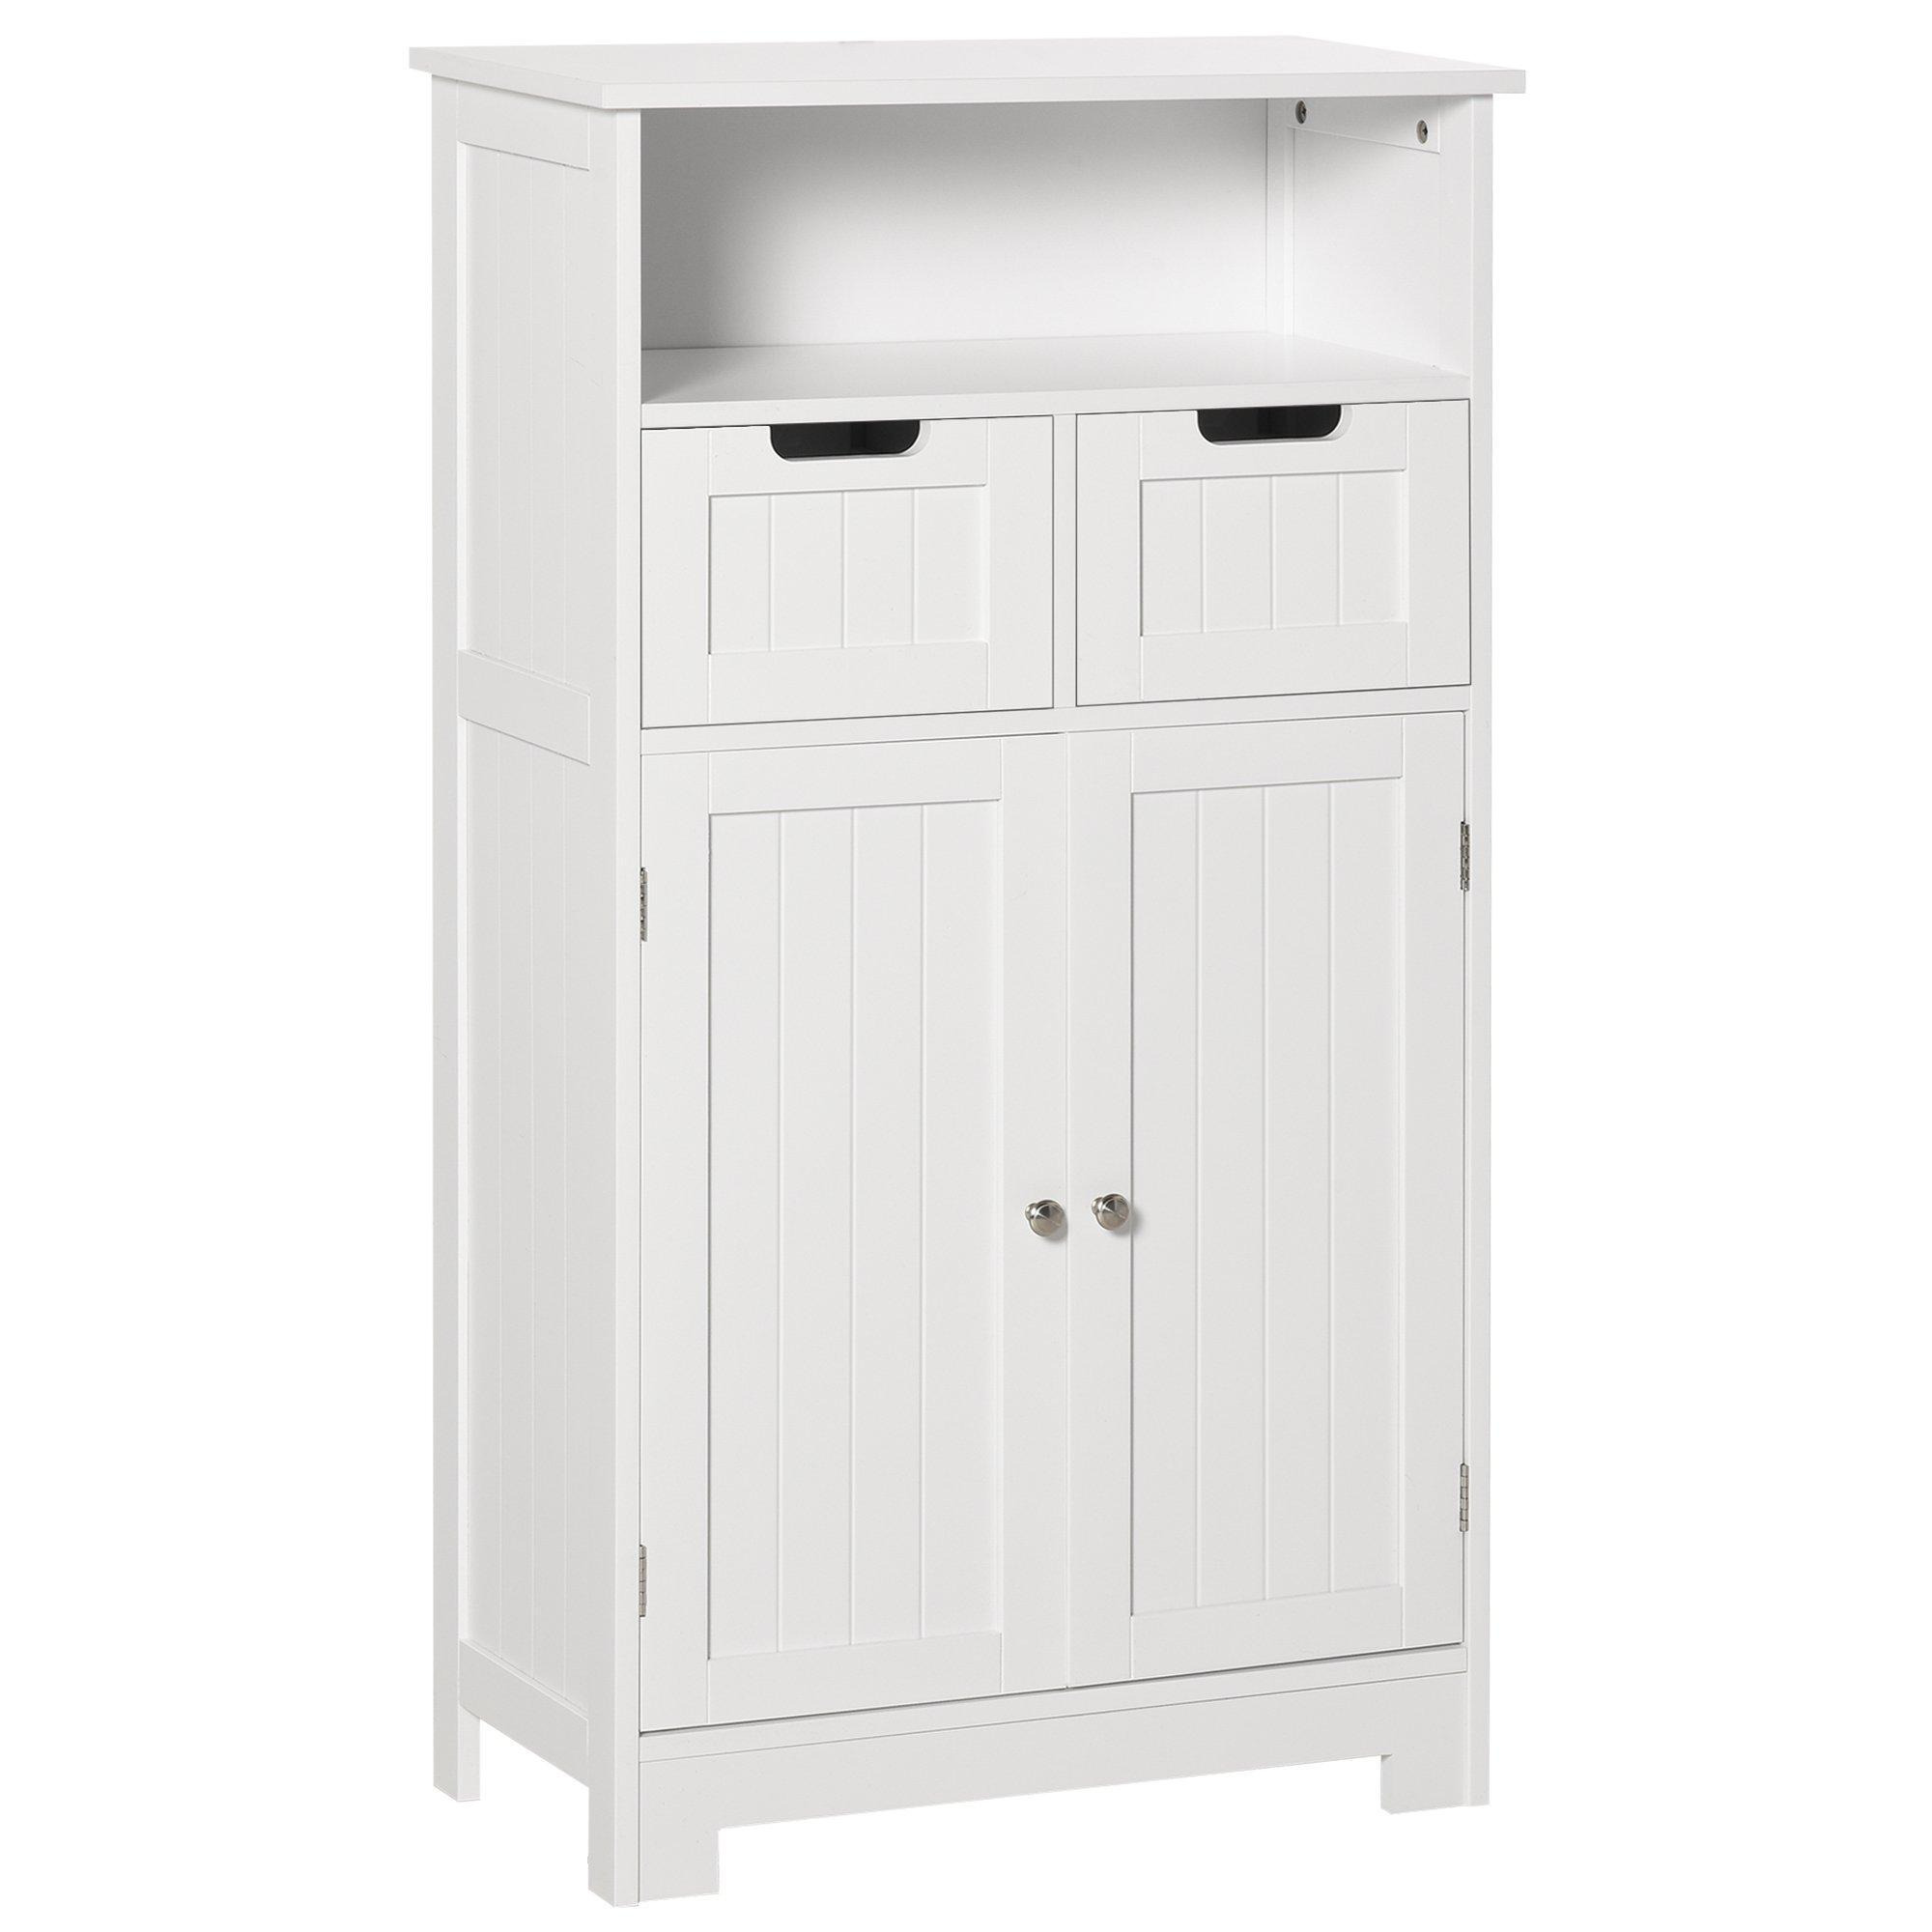 Bathroom Storage Cabinet Freestanding Cupboard with Open Shelf - image 1